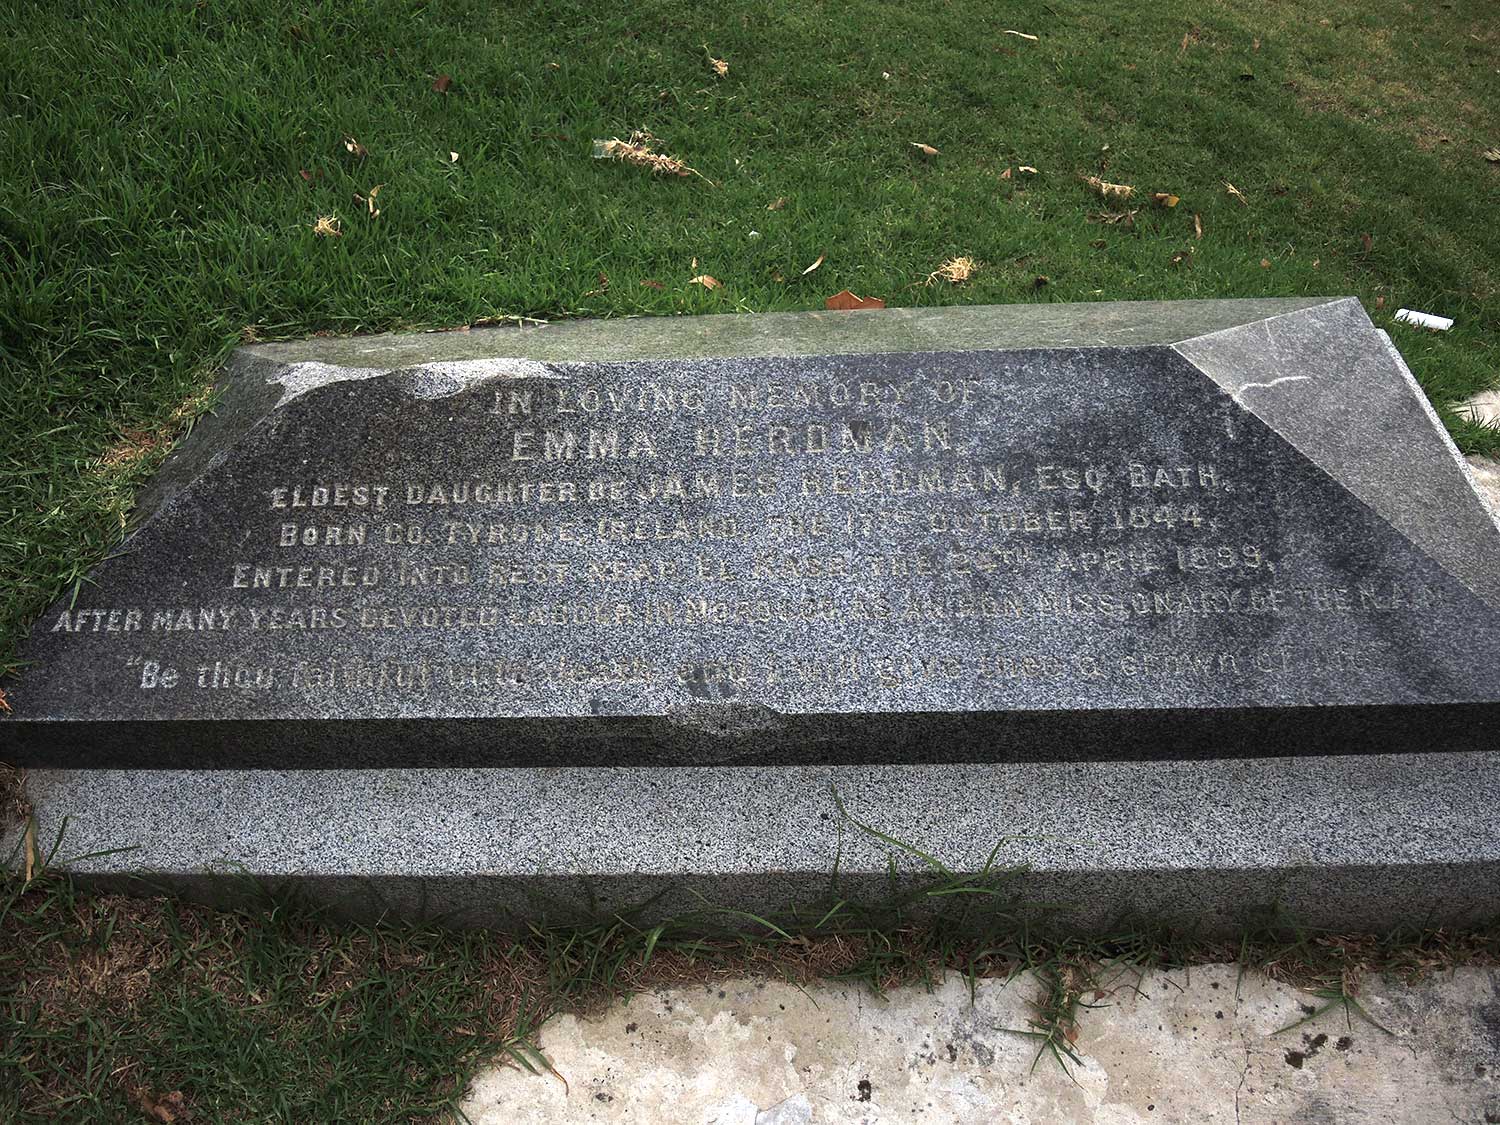 Detail view of the gravestone of Emma Herdmann, d. 1899